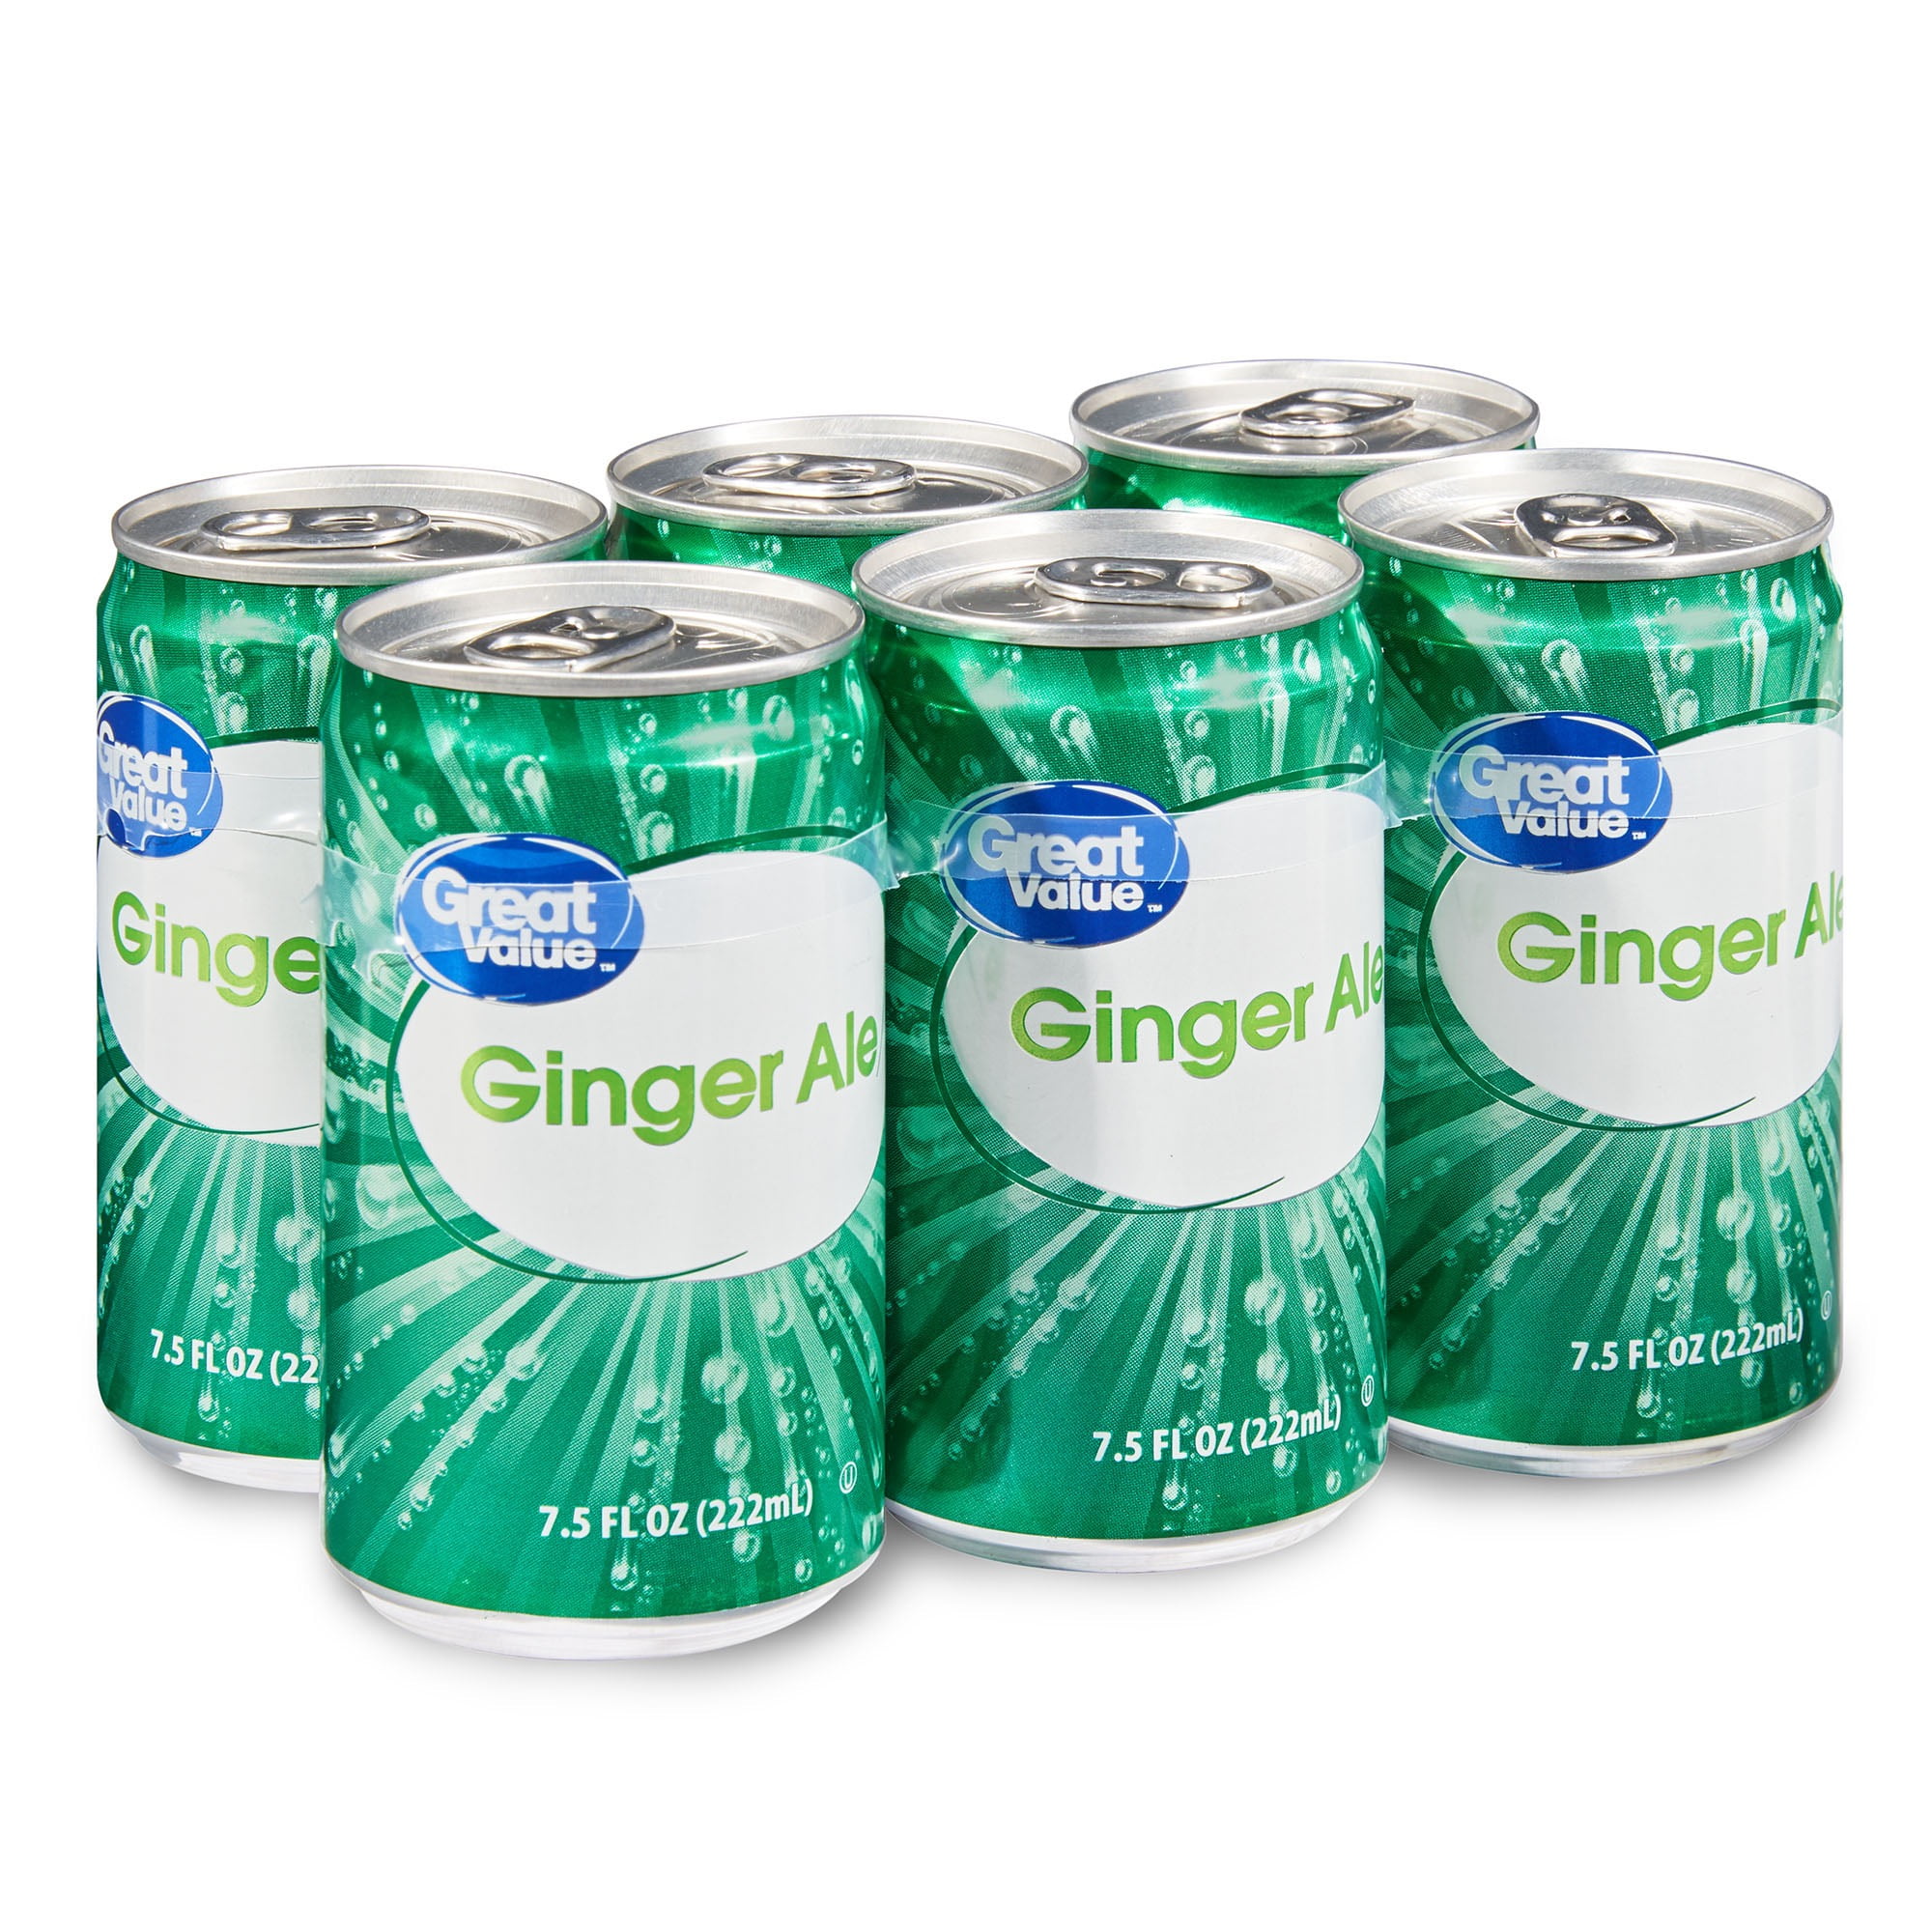 Great Value Ginger Ale, 7.5 fl oz, 6 Pack Cans